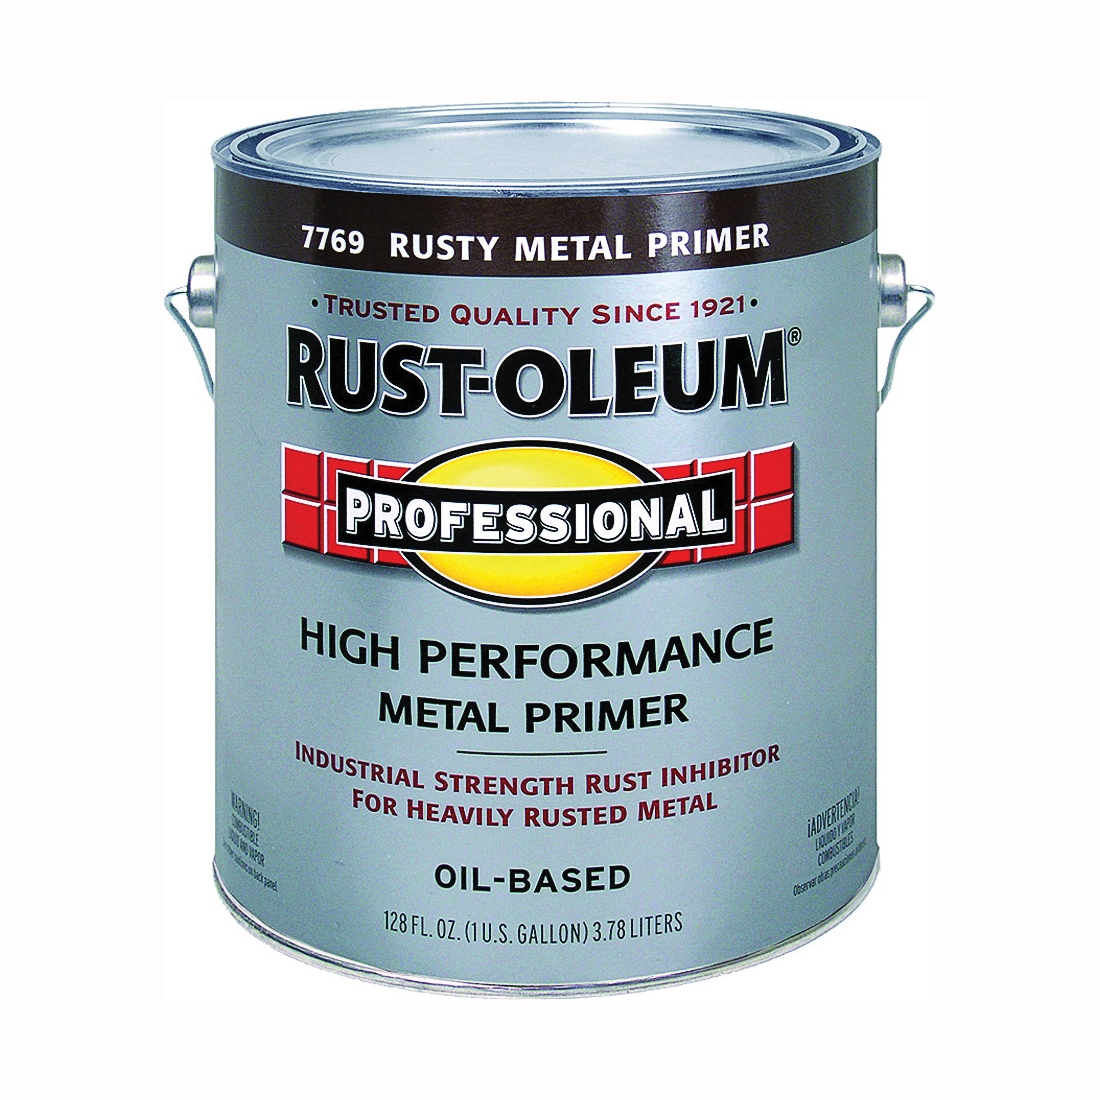 PROFESSIONAL 7769402 Rusty Metal Primer, Flat, Flat Rusty Metal Primer, 1 gal